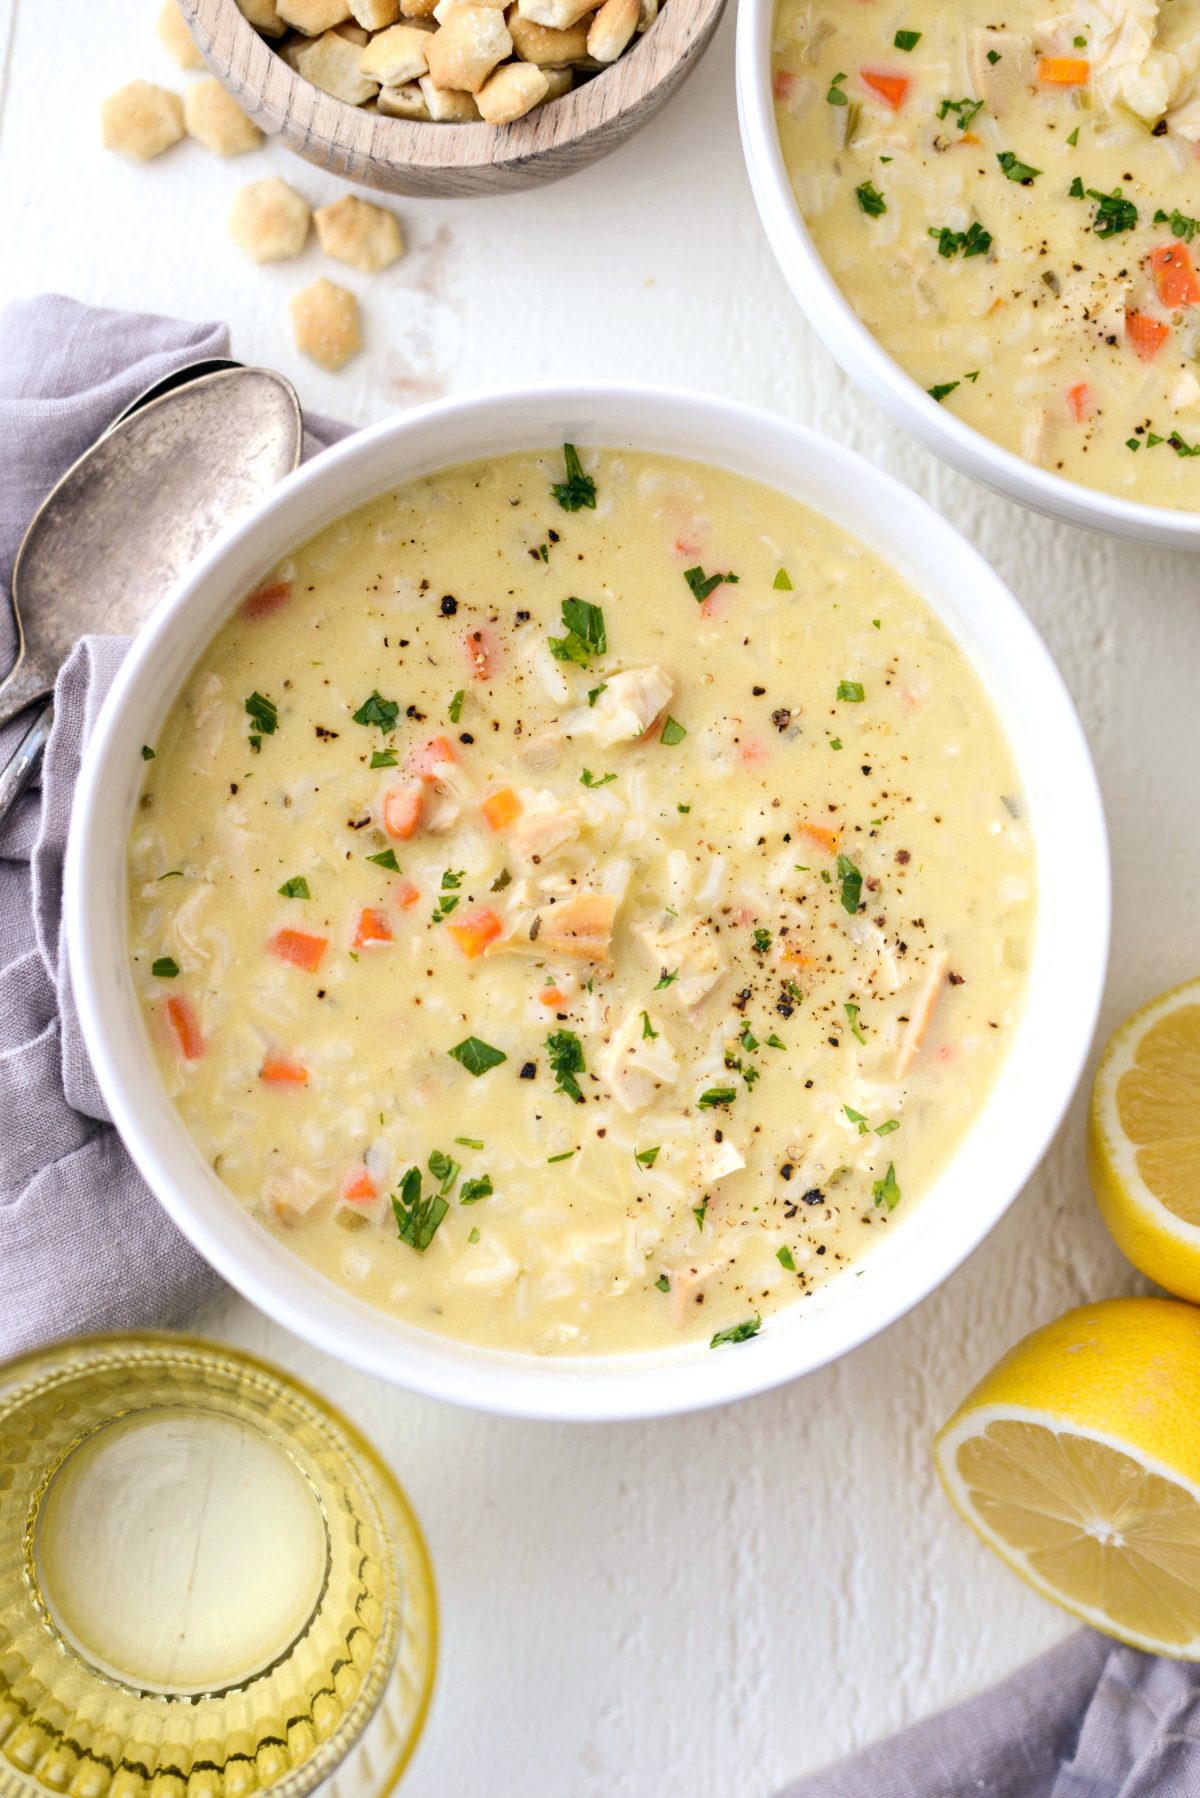 https://www.simplyscratch.com/wp-content/uploads/2019/02/Creamy-Chicken-Lemon-Rice-Soup-l-SimplyScratch.com-lemon-chicken-rice-soup-homemade-easy-recipe-fromscratch-healthy-11-1200x1798.jpg